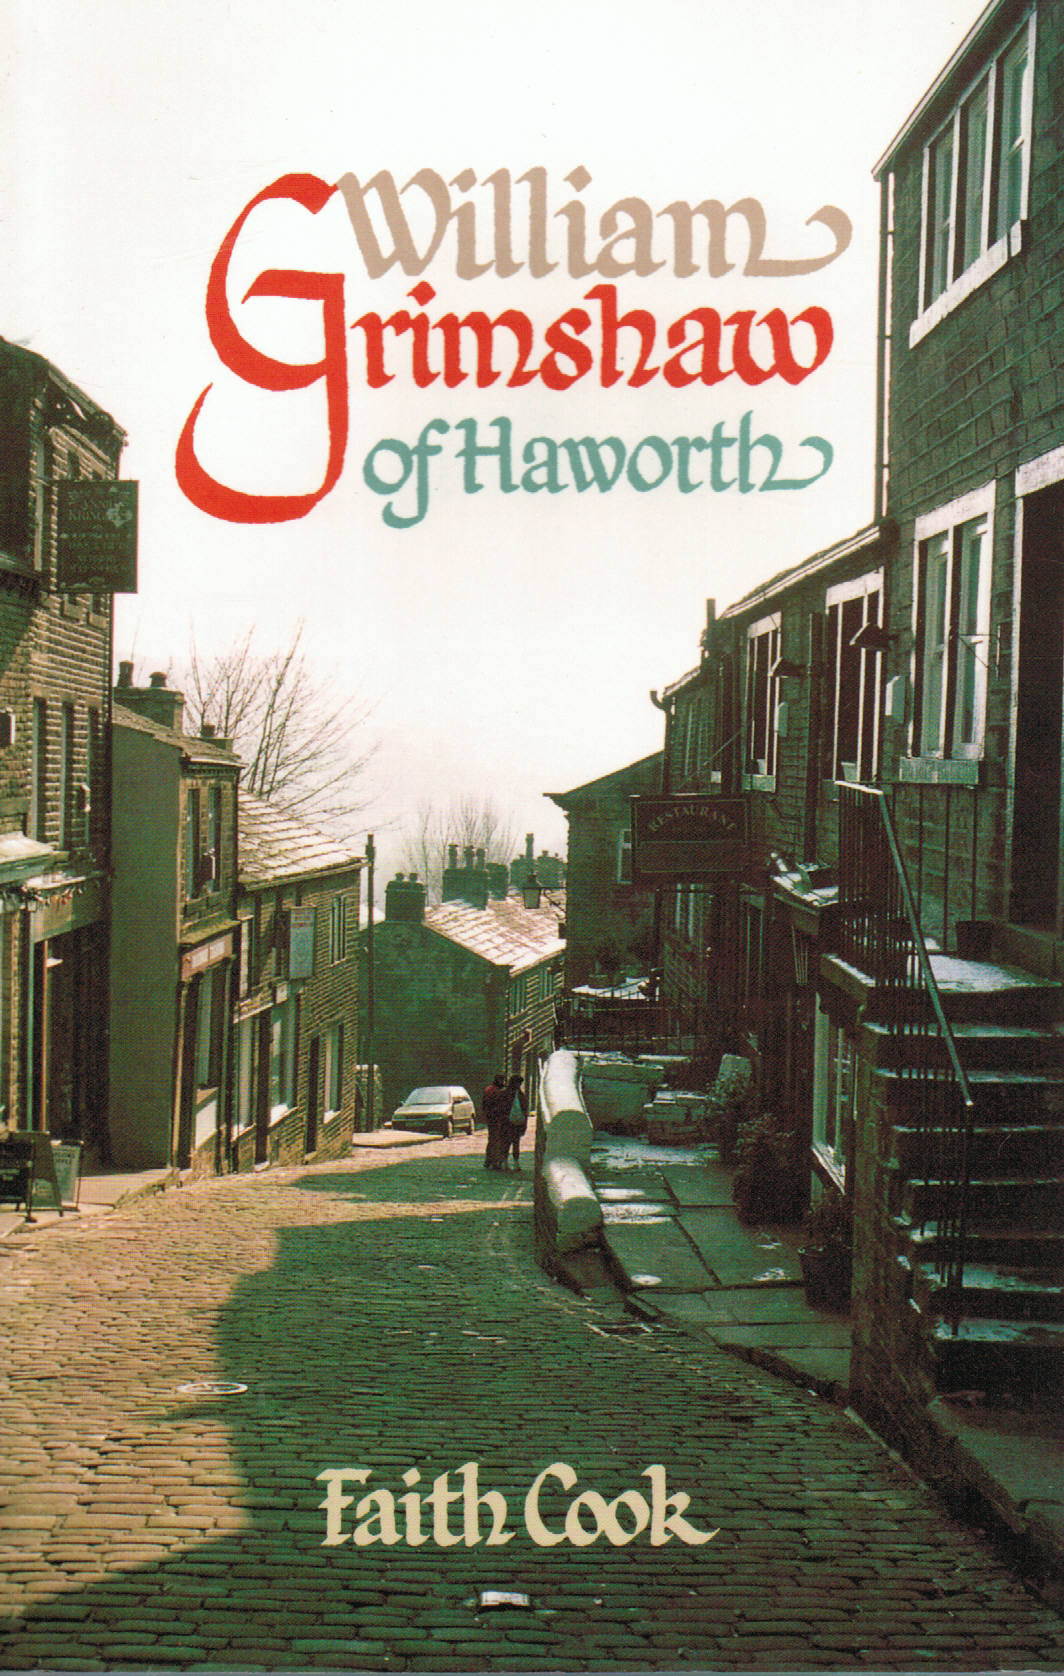 William Grimshaw of Haworth